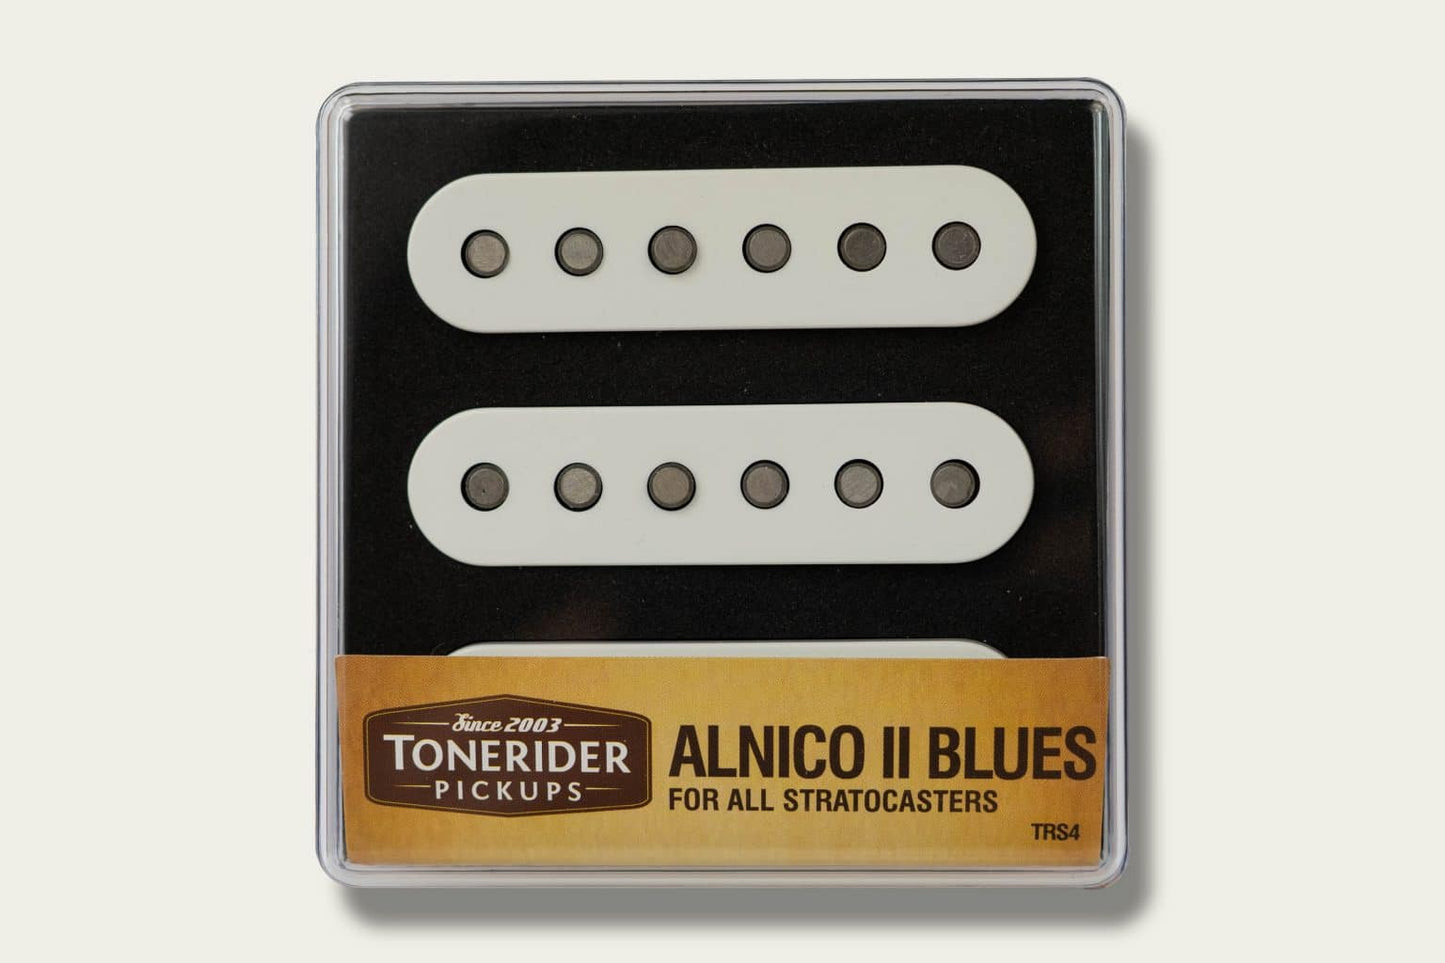 Tonerider Alnico II Blues for Strat